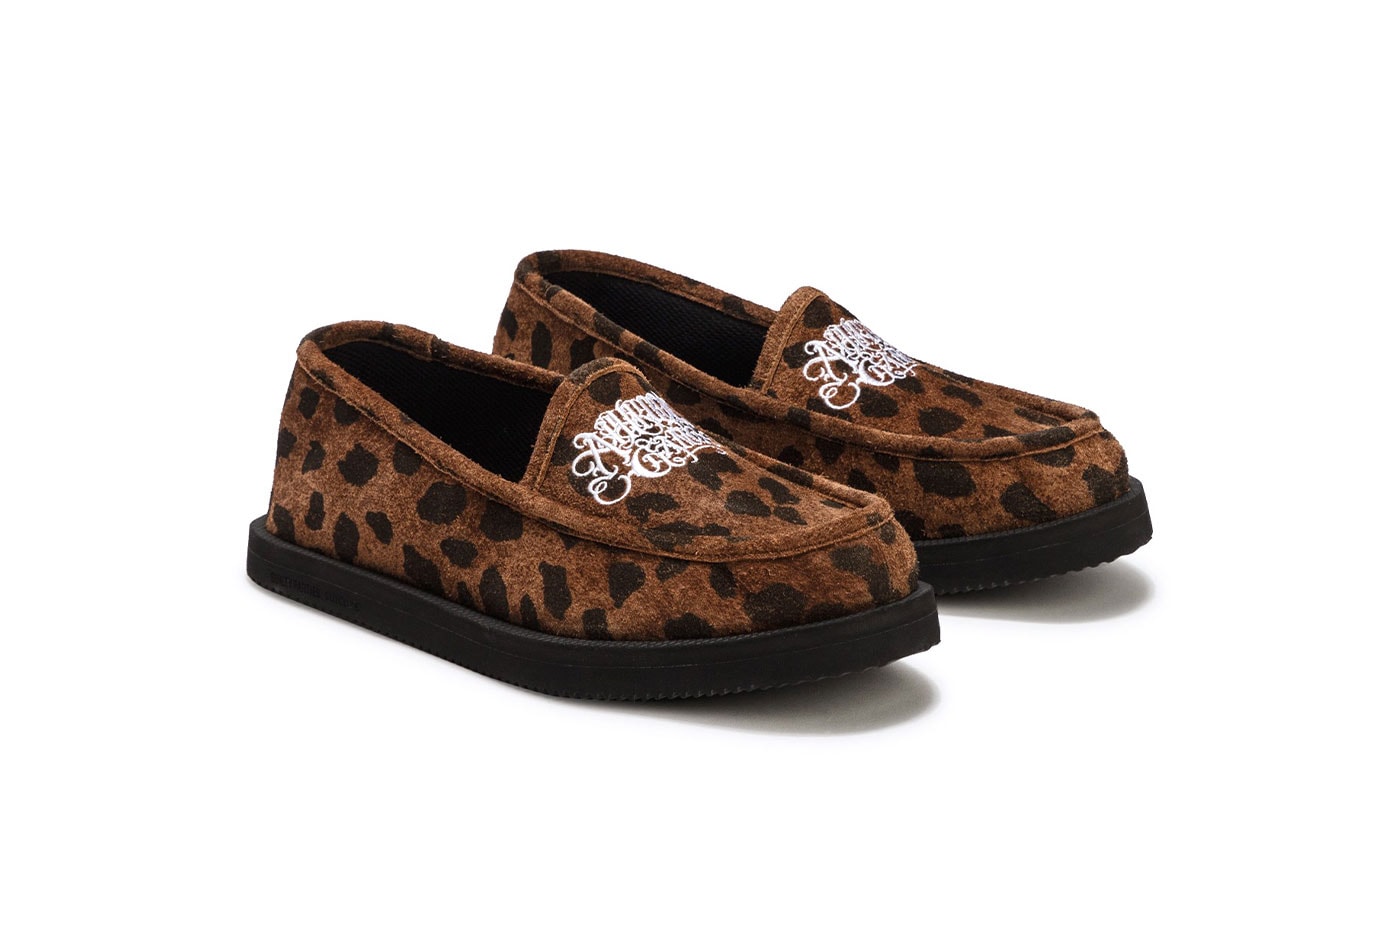 Wacko Maria Budspool Suicoke Deebo shoes Leopard Print Brown HBX Price Buy Info Release